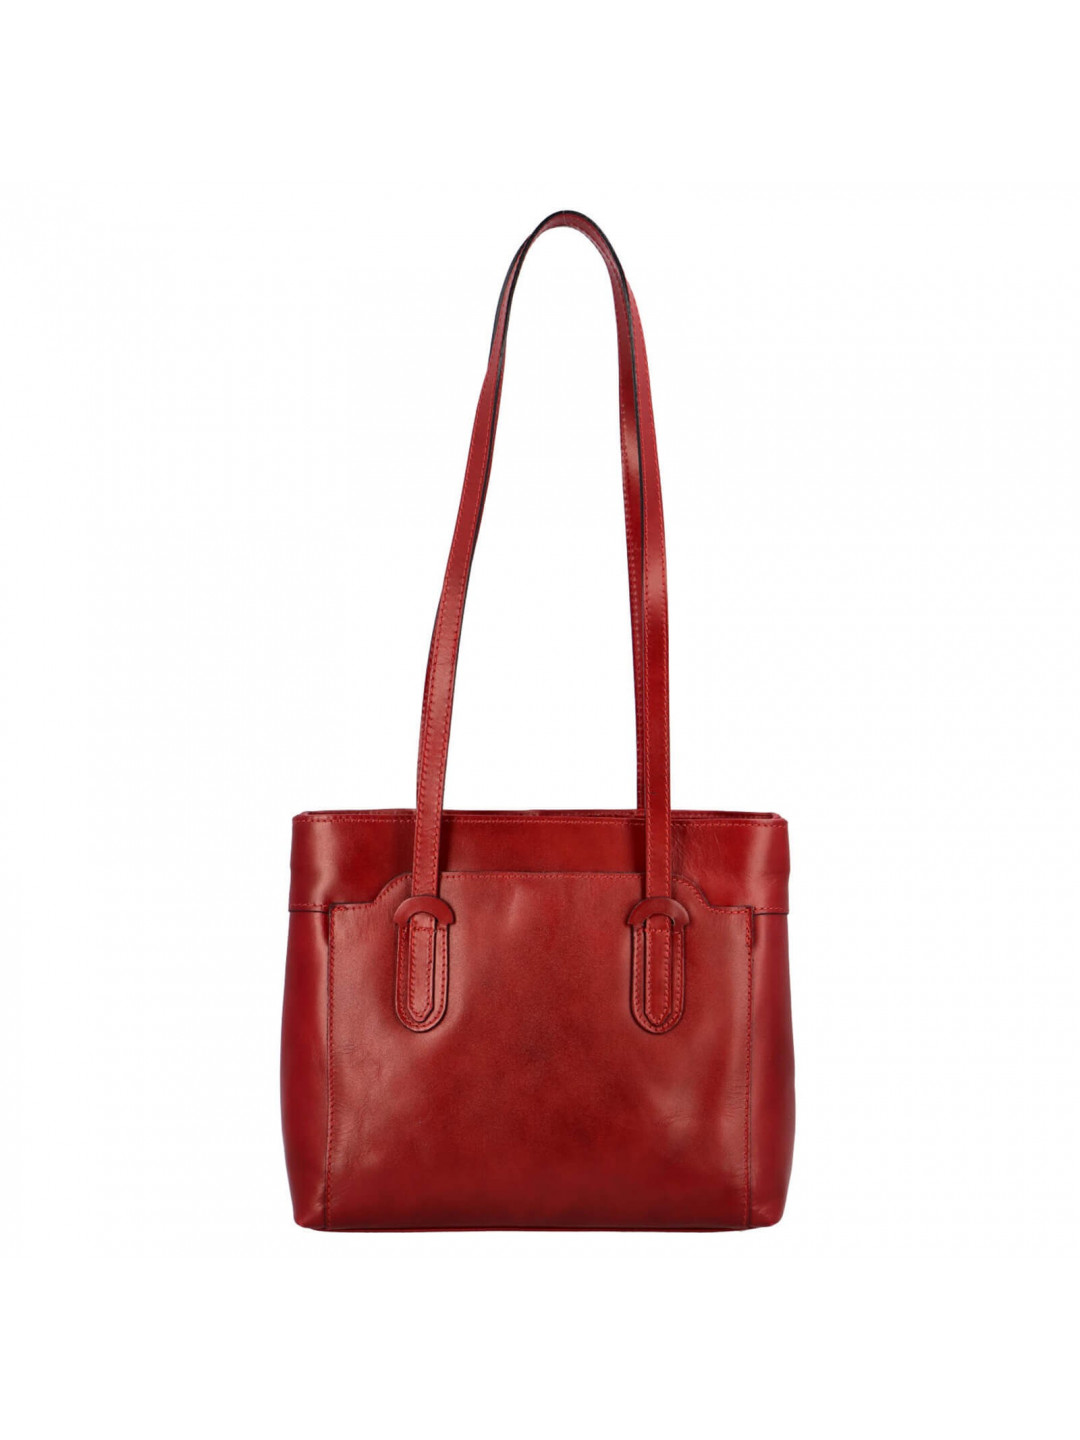 Dámská kožená kabelka Delami Tyra – červená